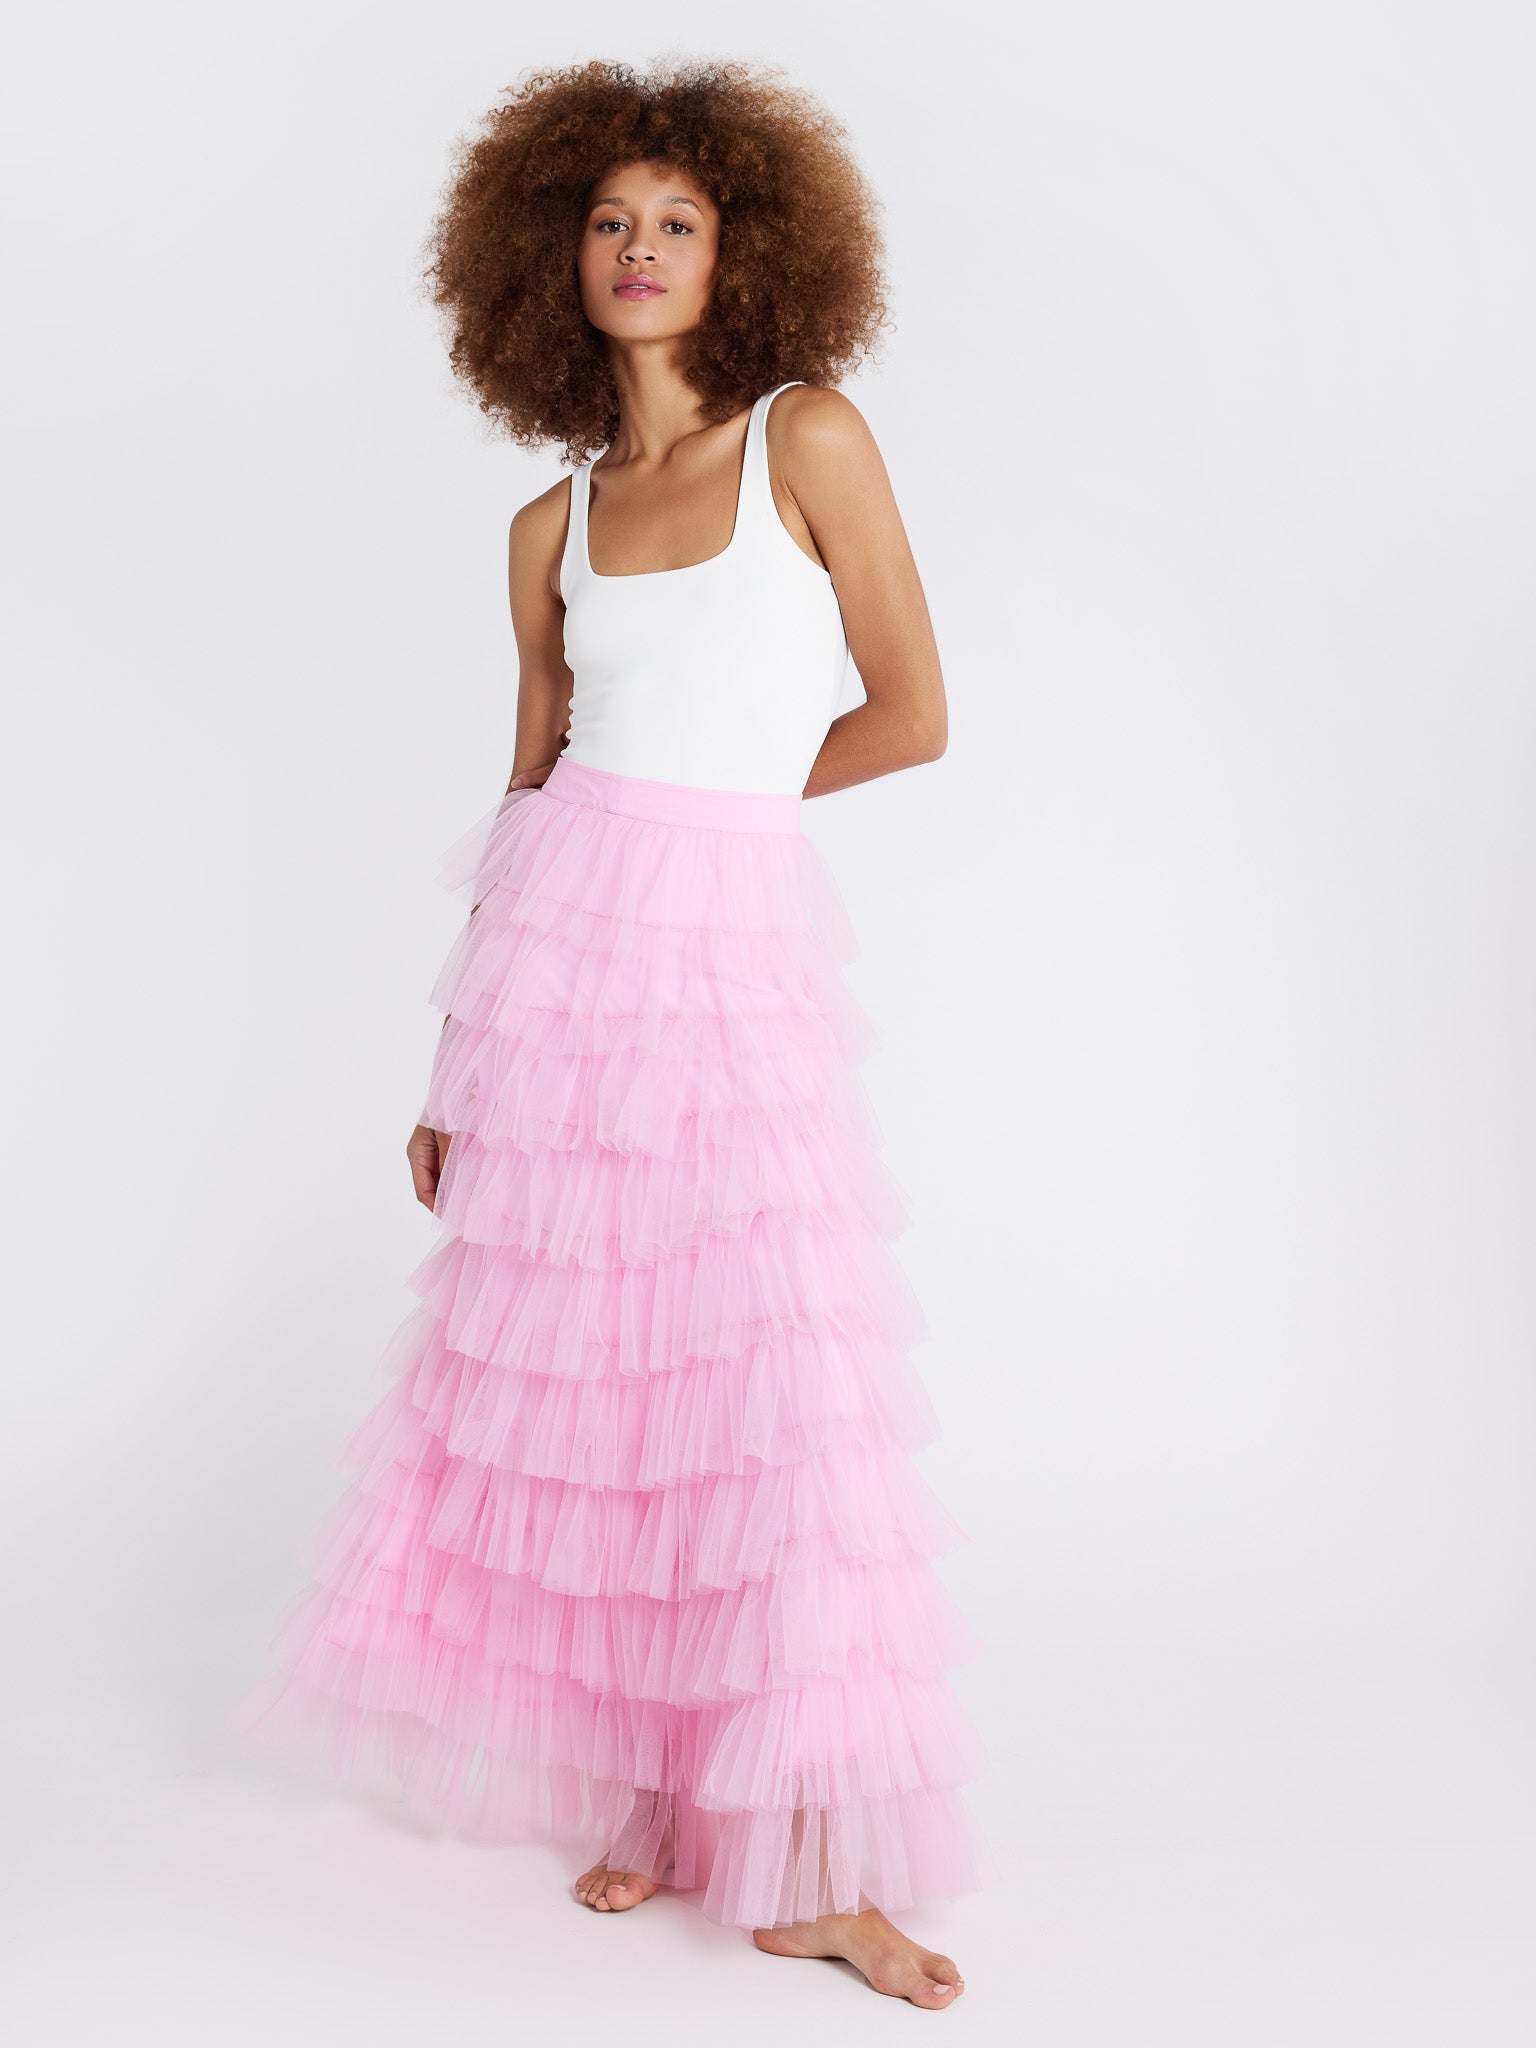 MILLE Clothing Lulu Skirt in Bubblegum Tulle